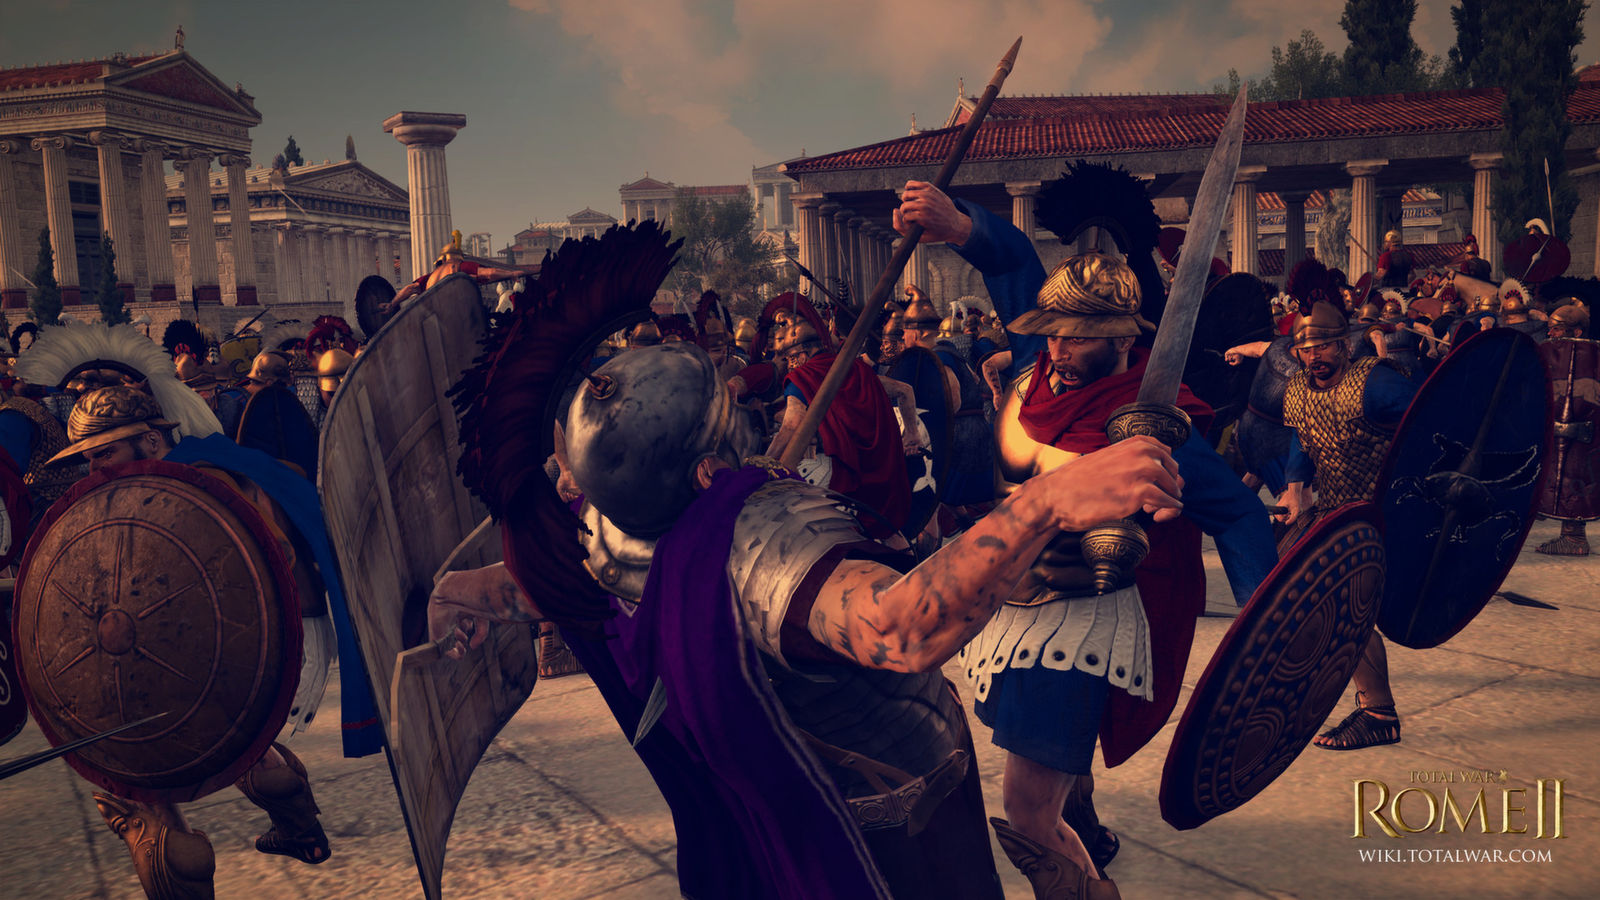 Total War: Rome II 2 Emperor Edition (Steam) RU/CIS